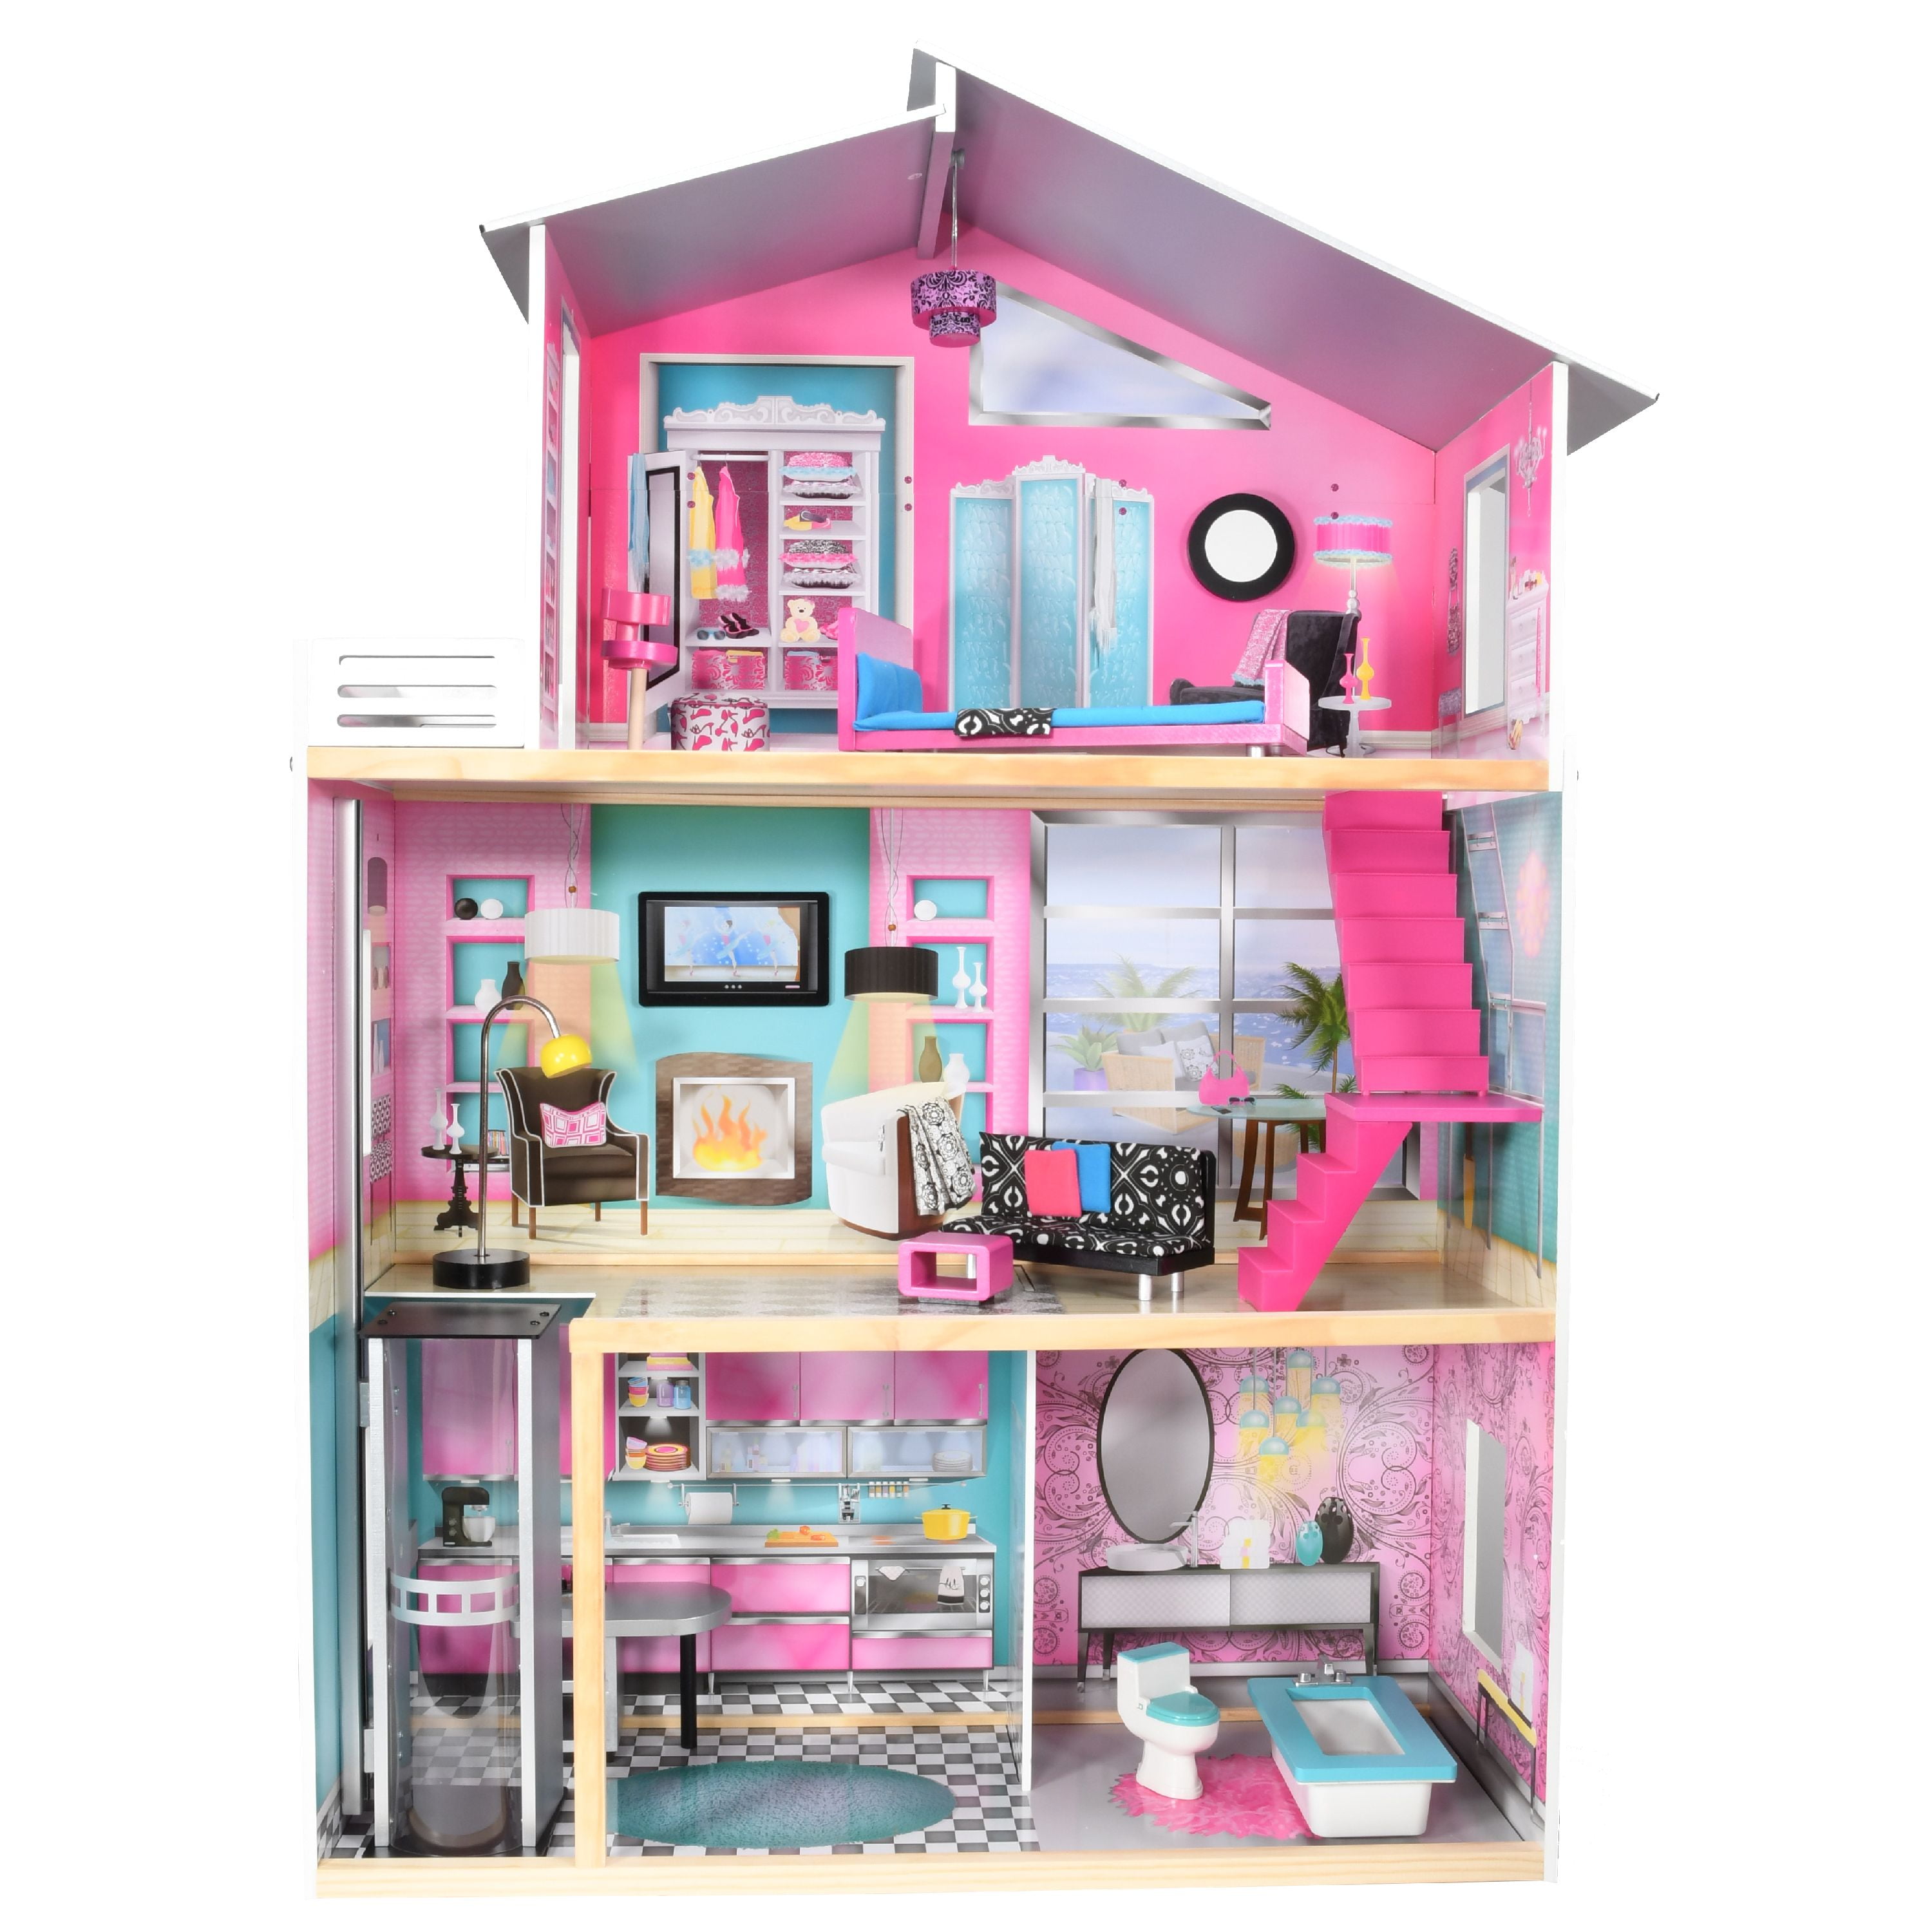 toys r us imaginarium modern luxury dollhouse